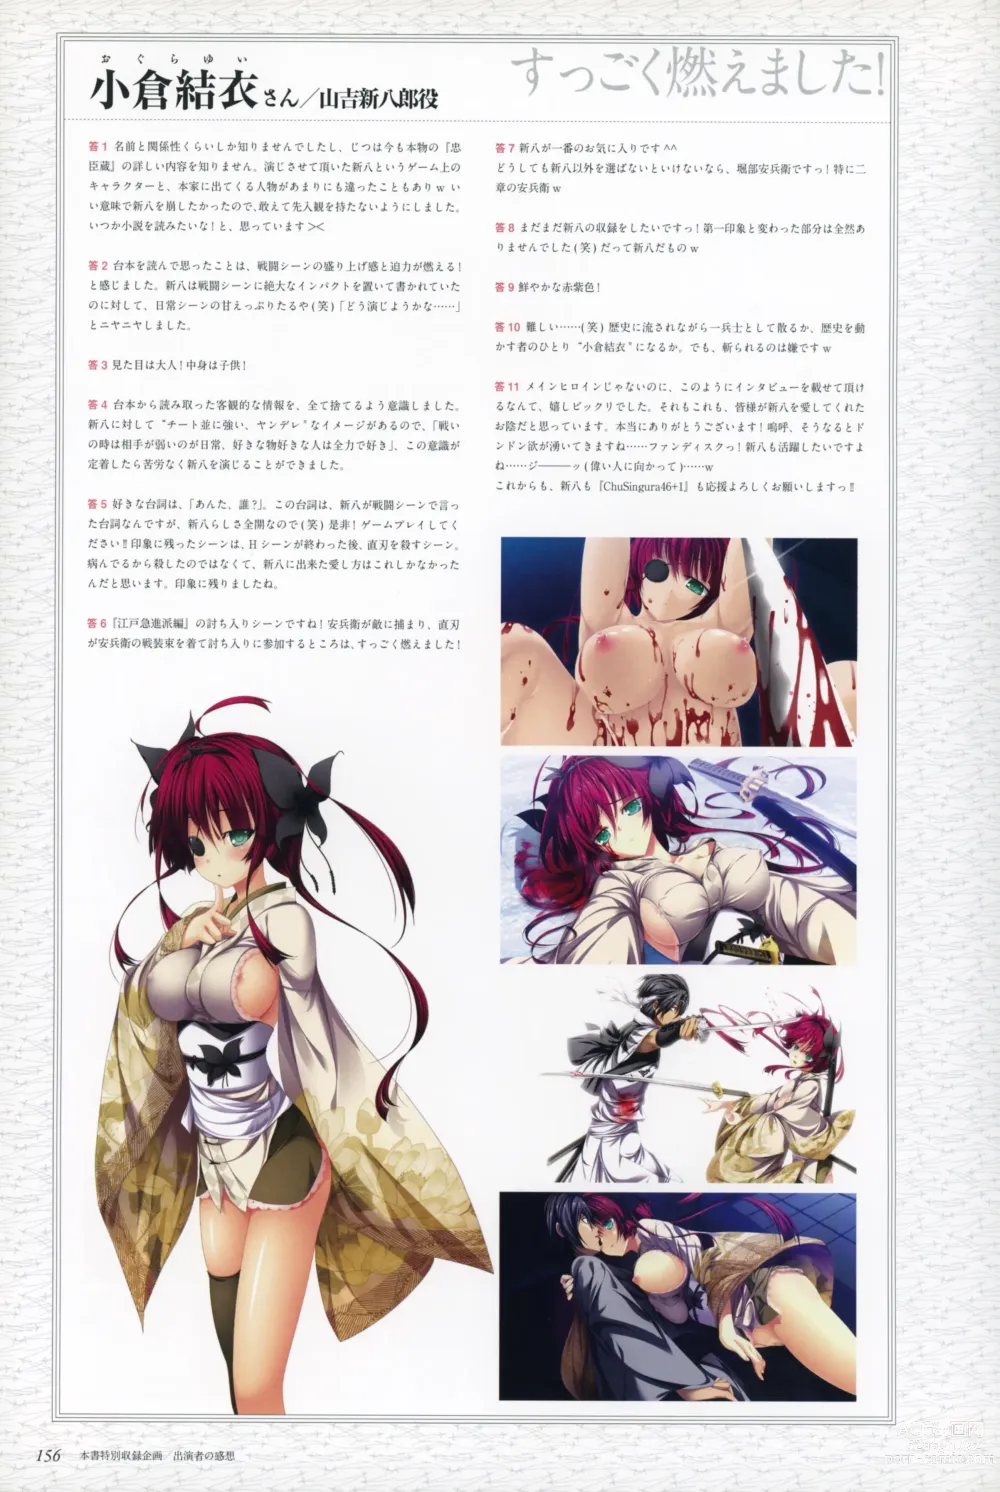 Page 158 of manga ChuSinGura 46+1 Official Visual Fan Book